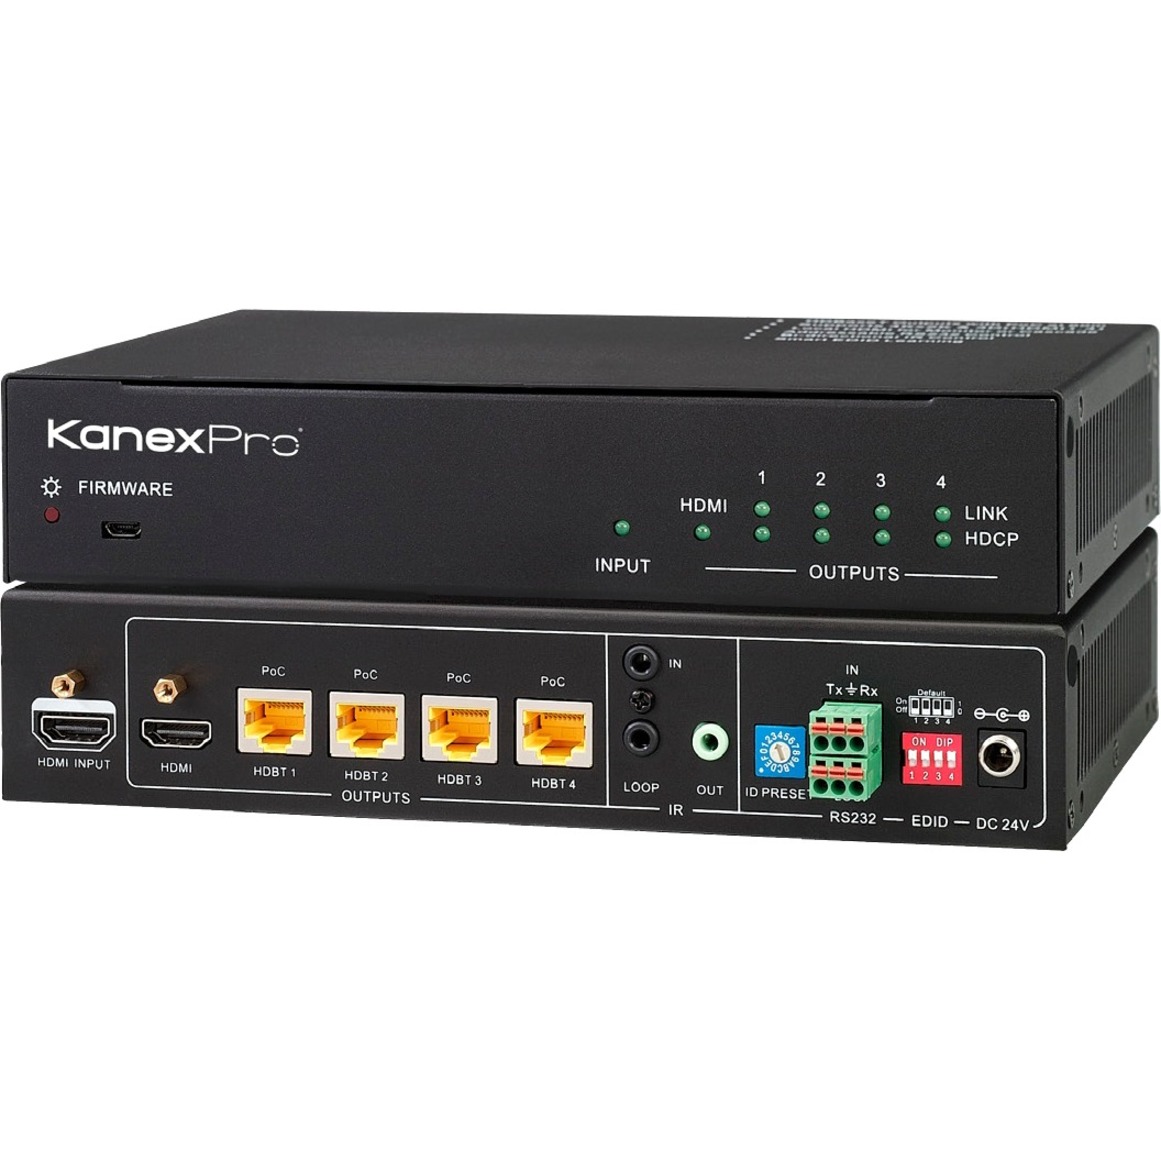 KanexPro 4K HDBaseT 1x4 Distribution Amplifier up to 230 feet (70m) - image 1 of 2